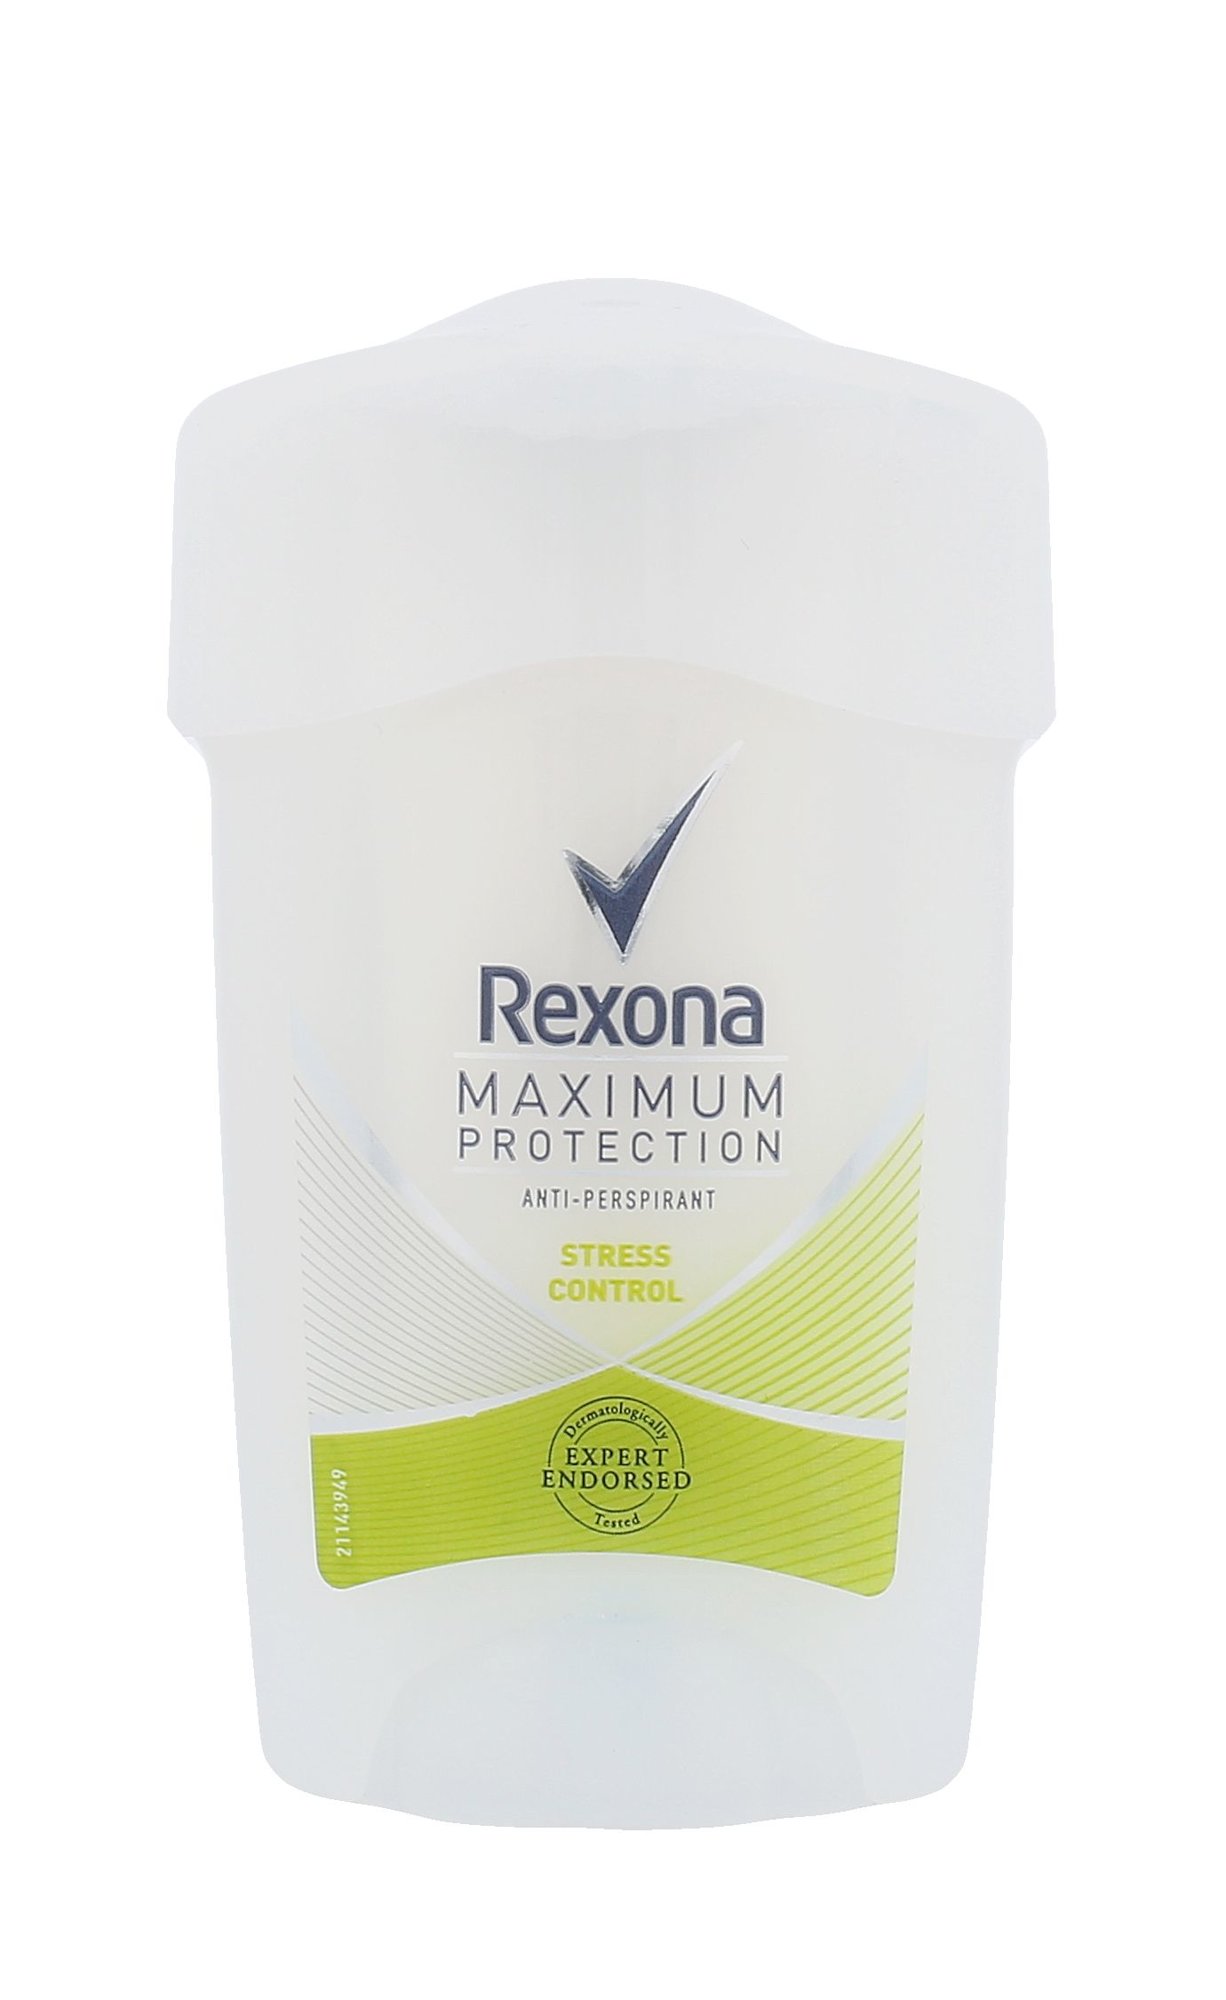 Rexona Maximum Protection Stress Control Anti-Perspirant